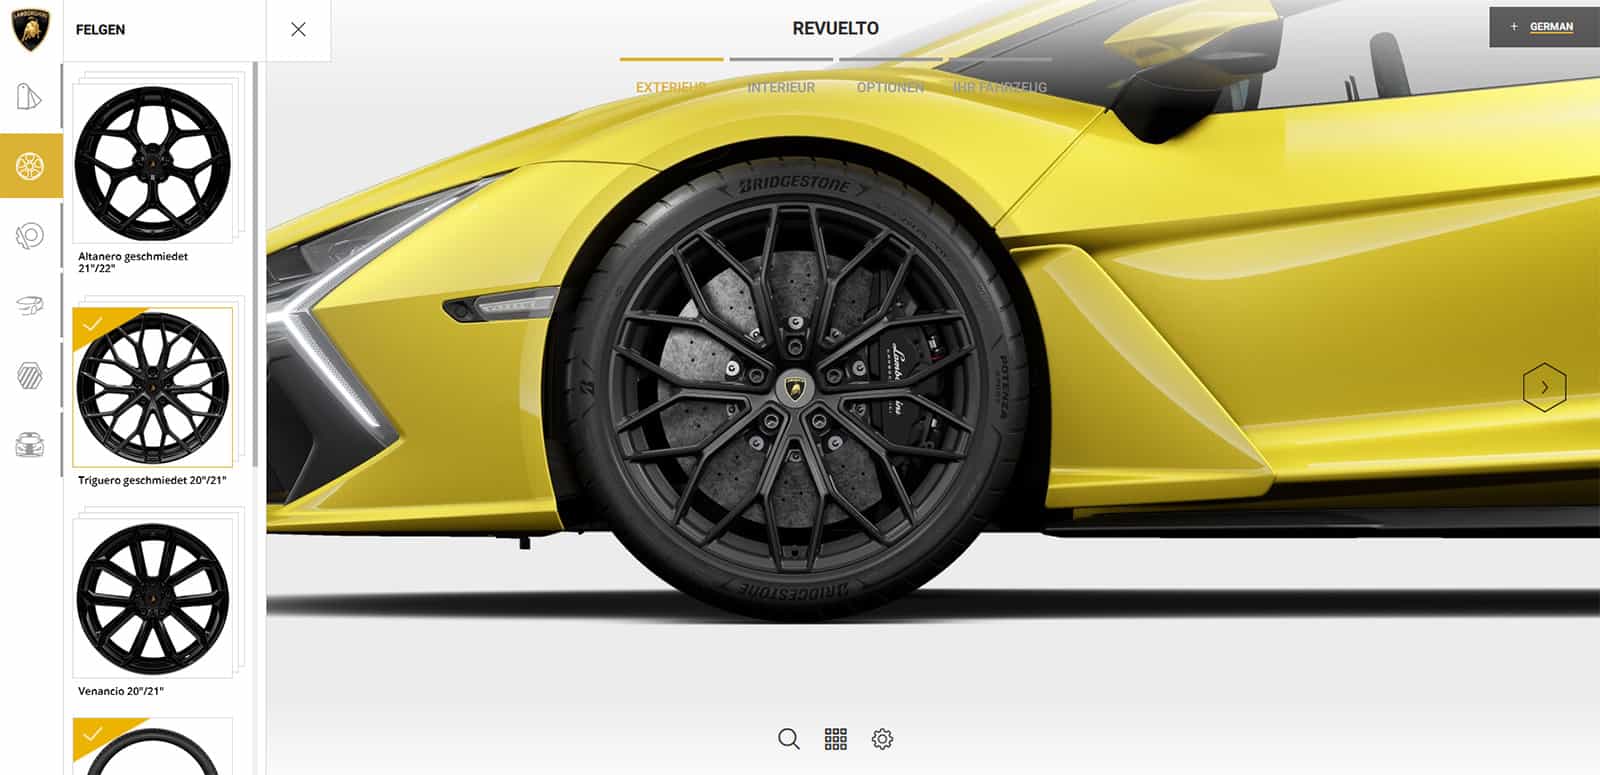 Viele Optionen bietet der Online-Konfigurator des Lamborghini Revuelto